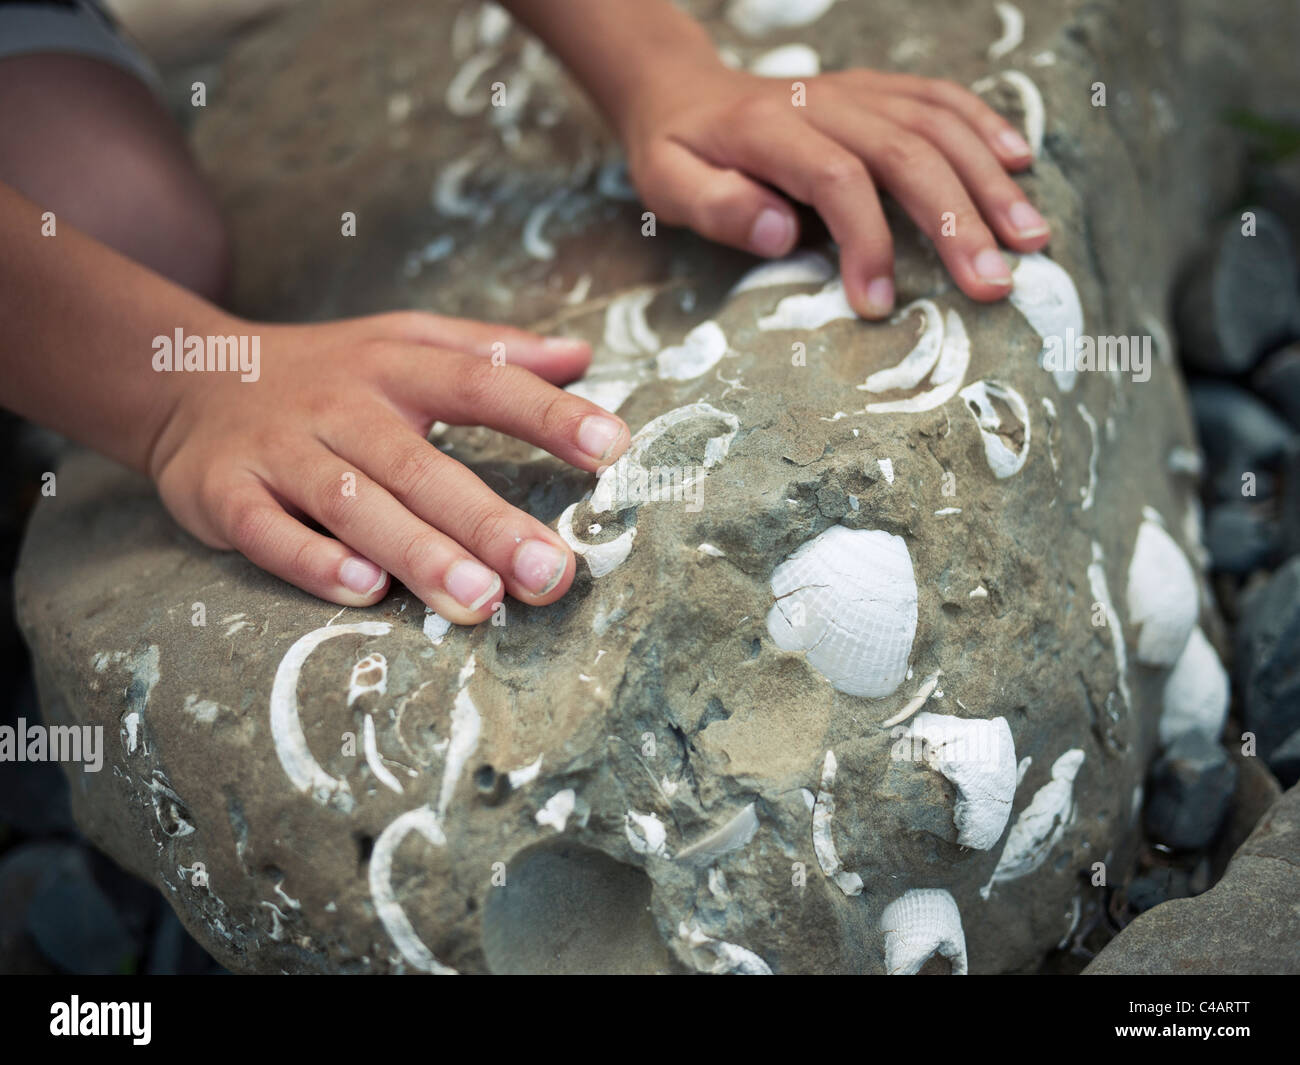 Boy's hands touching rock containing seashells. Stock Photo